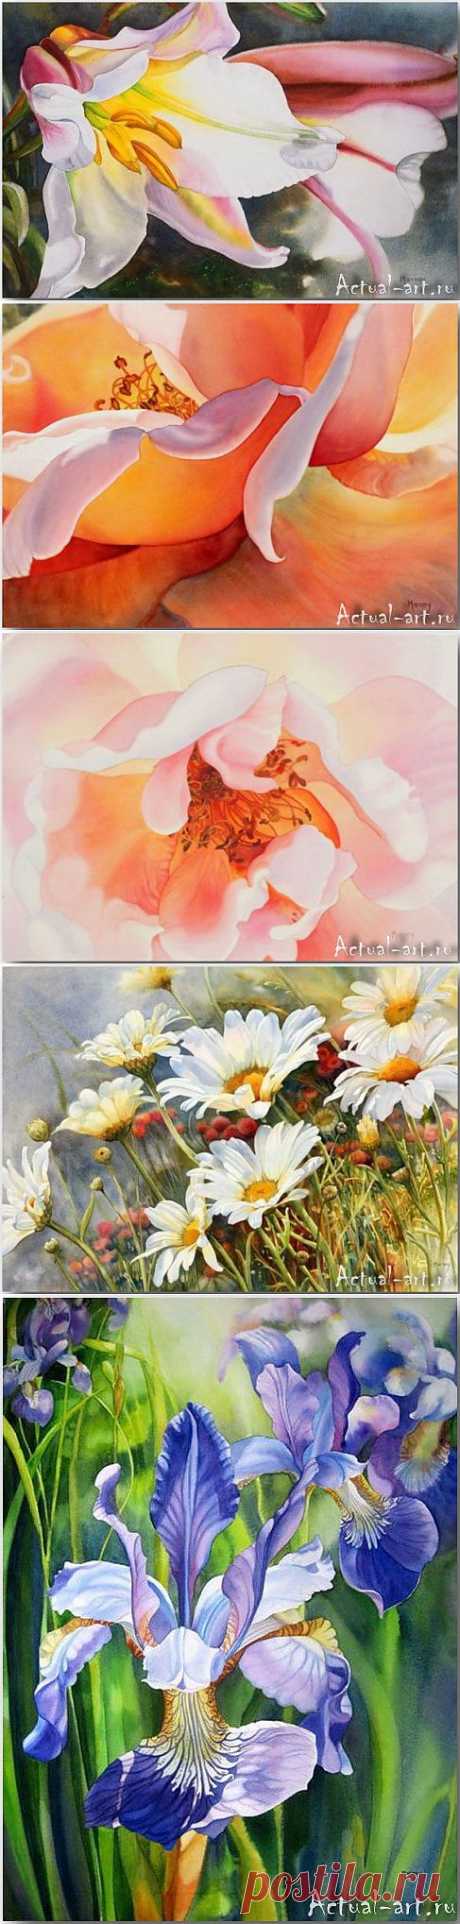 Marney Ward: луч солнца в лепестках цветка | Actual-art.ru